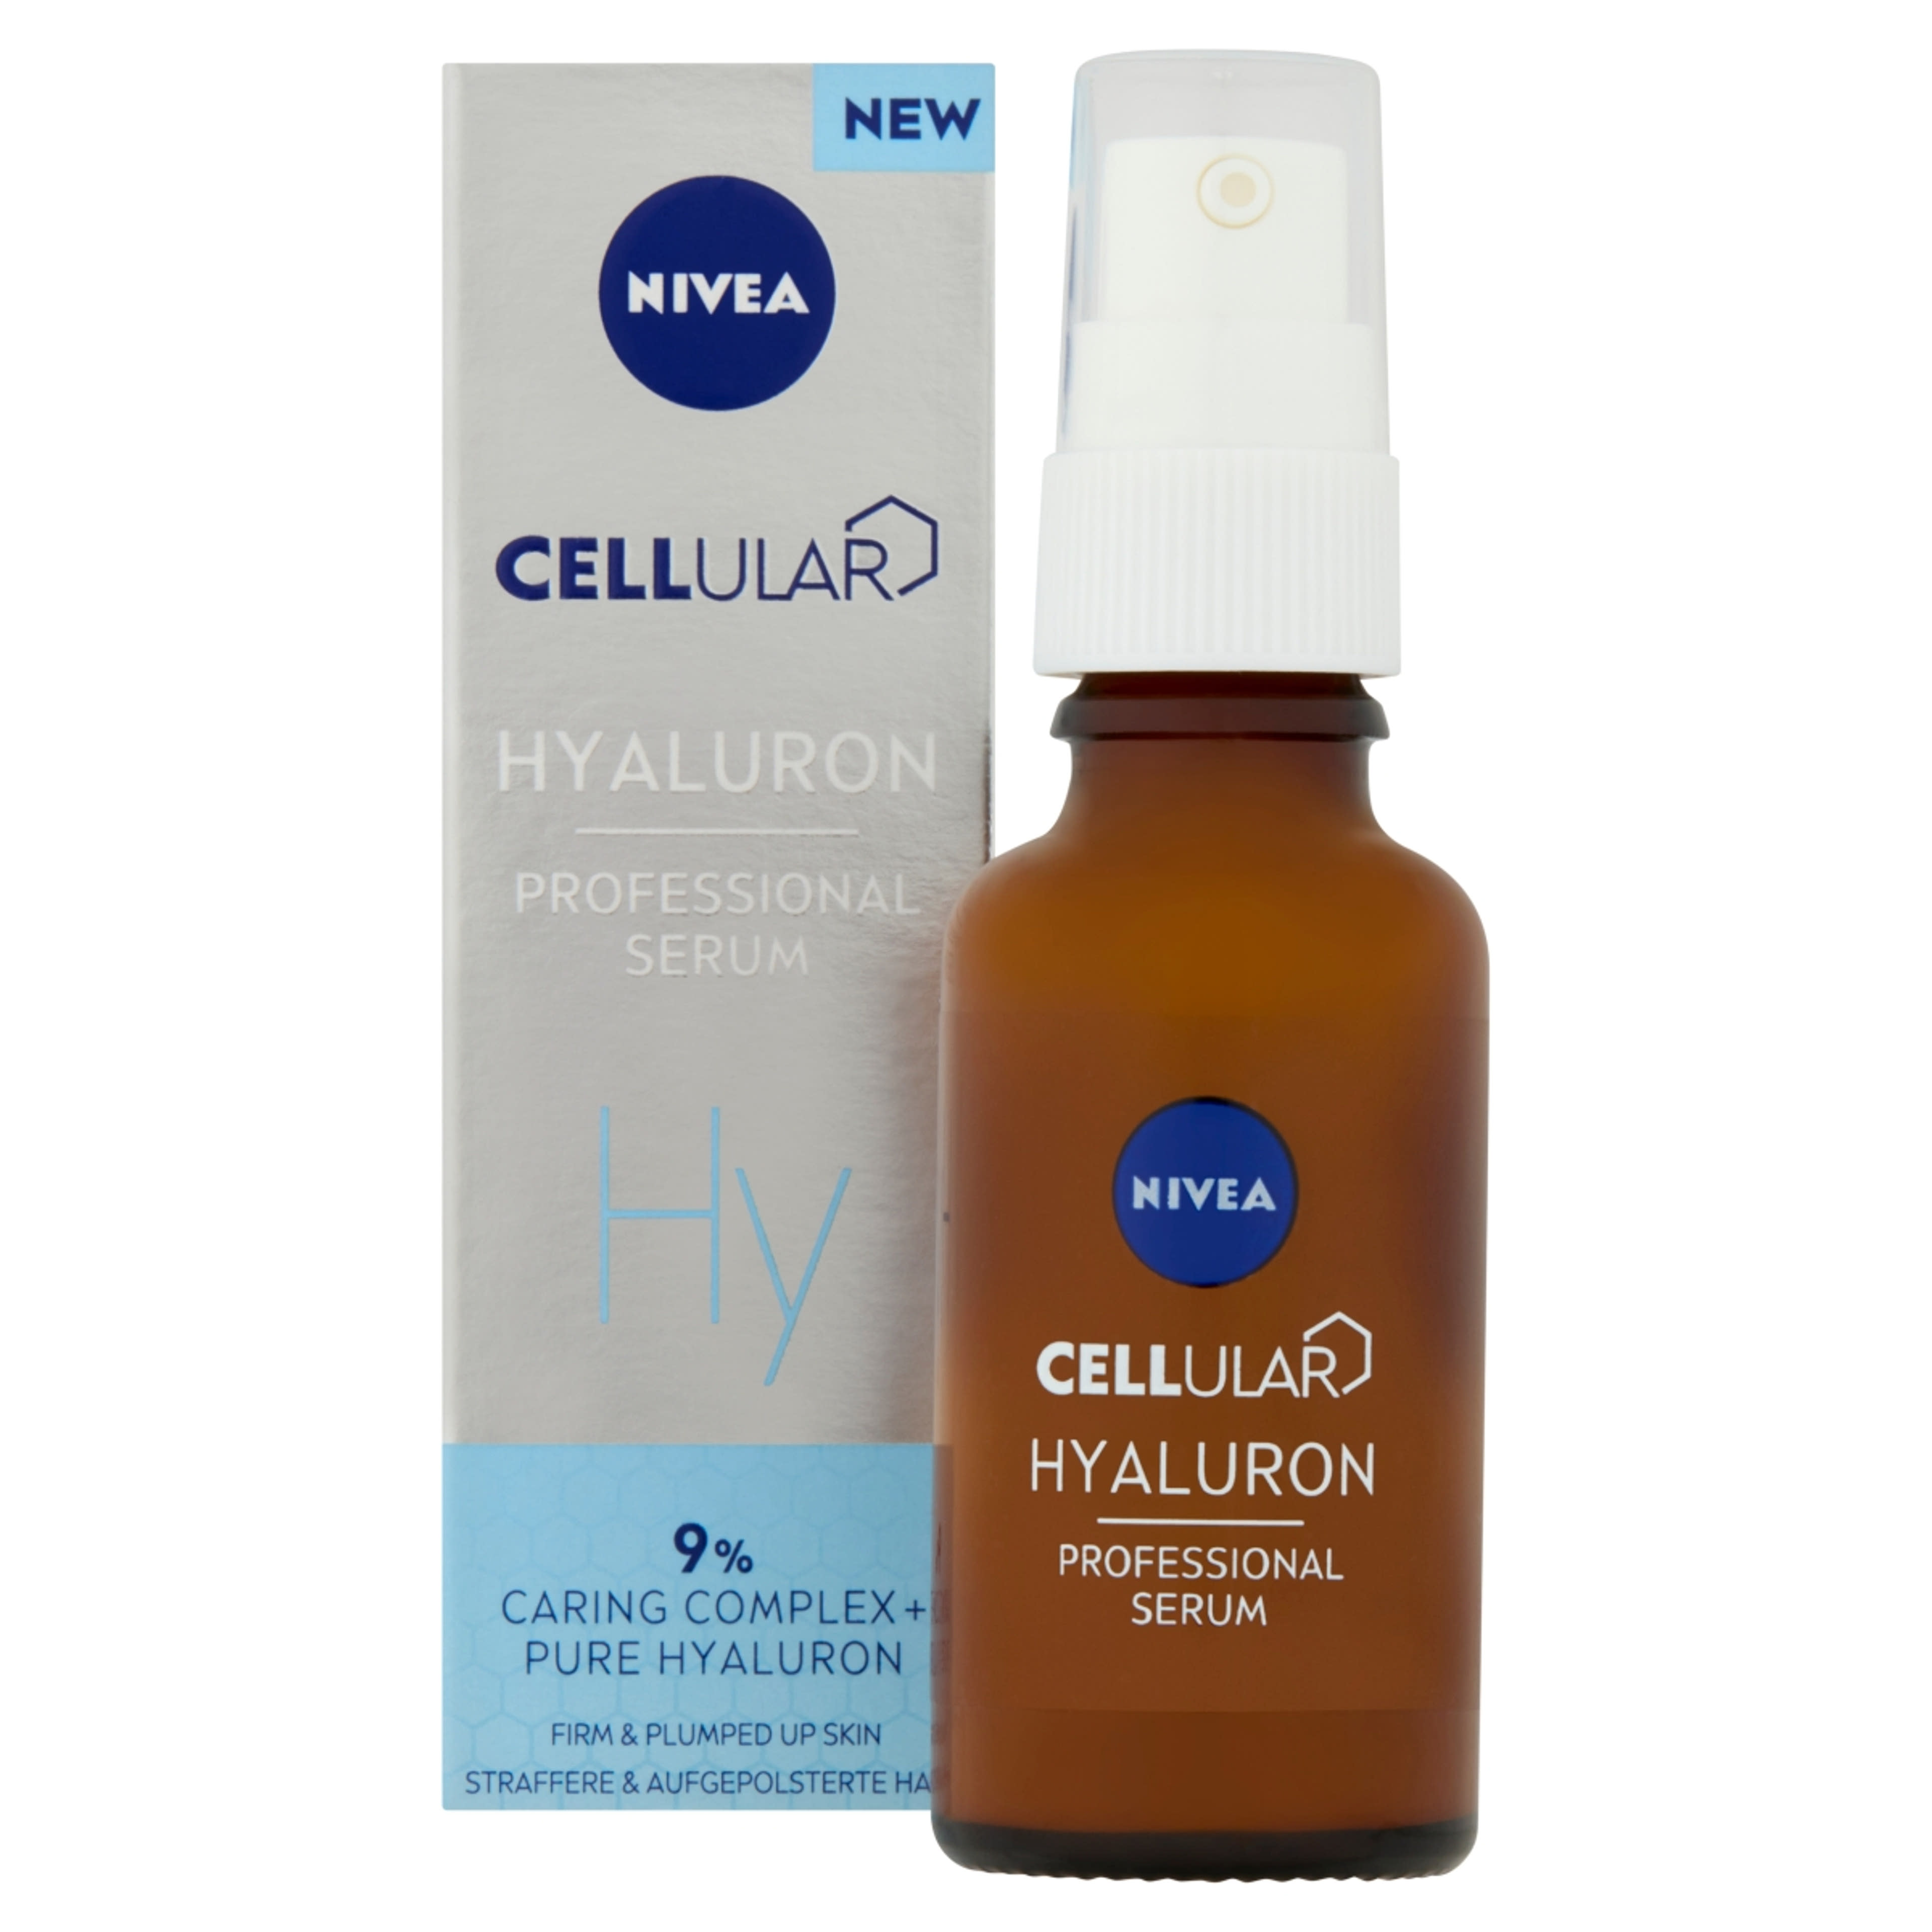 Nivea Cellular Hyaluron professzionális szérum - 30 ml-2